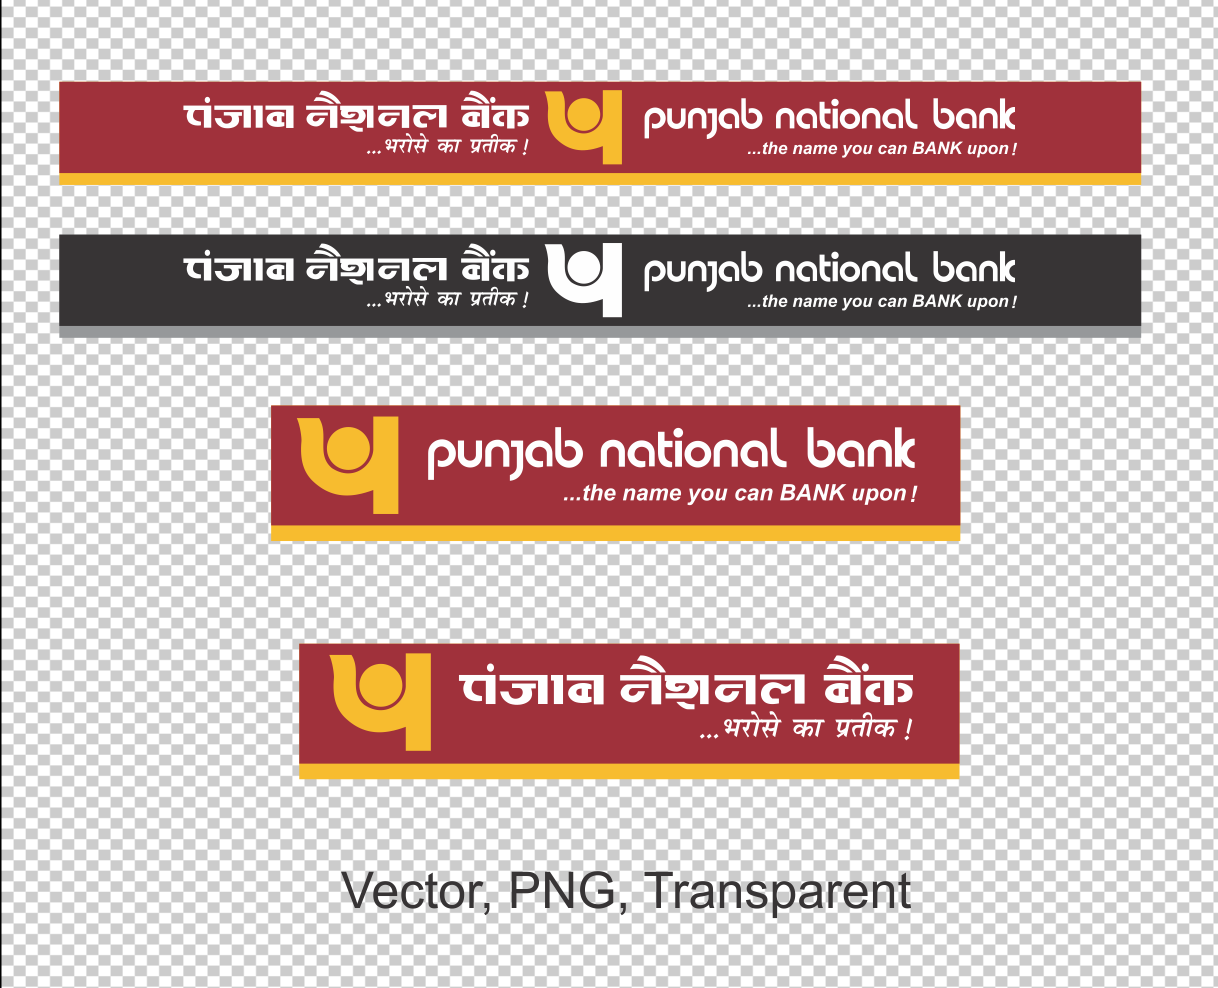 The Bank of Punjab Logo PNG Vector (EPS) Free Download